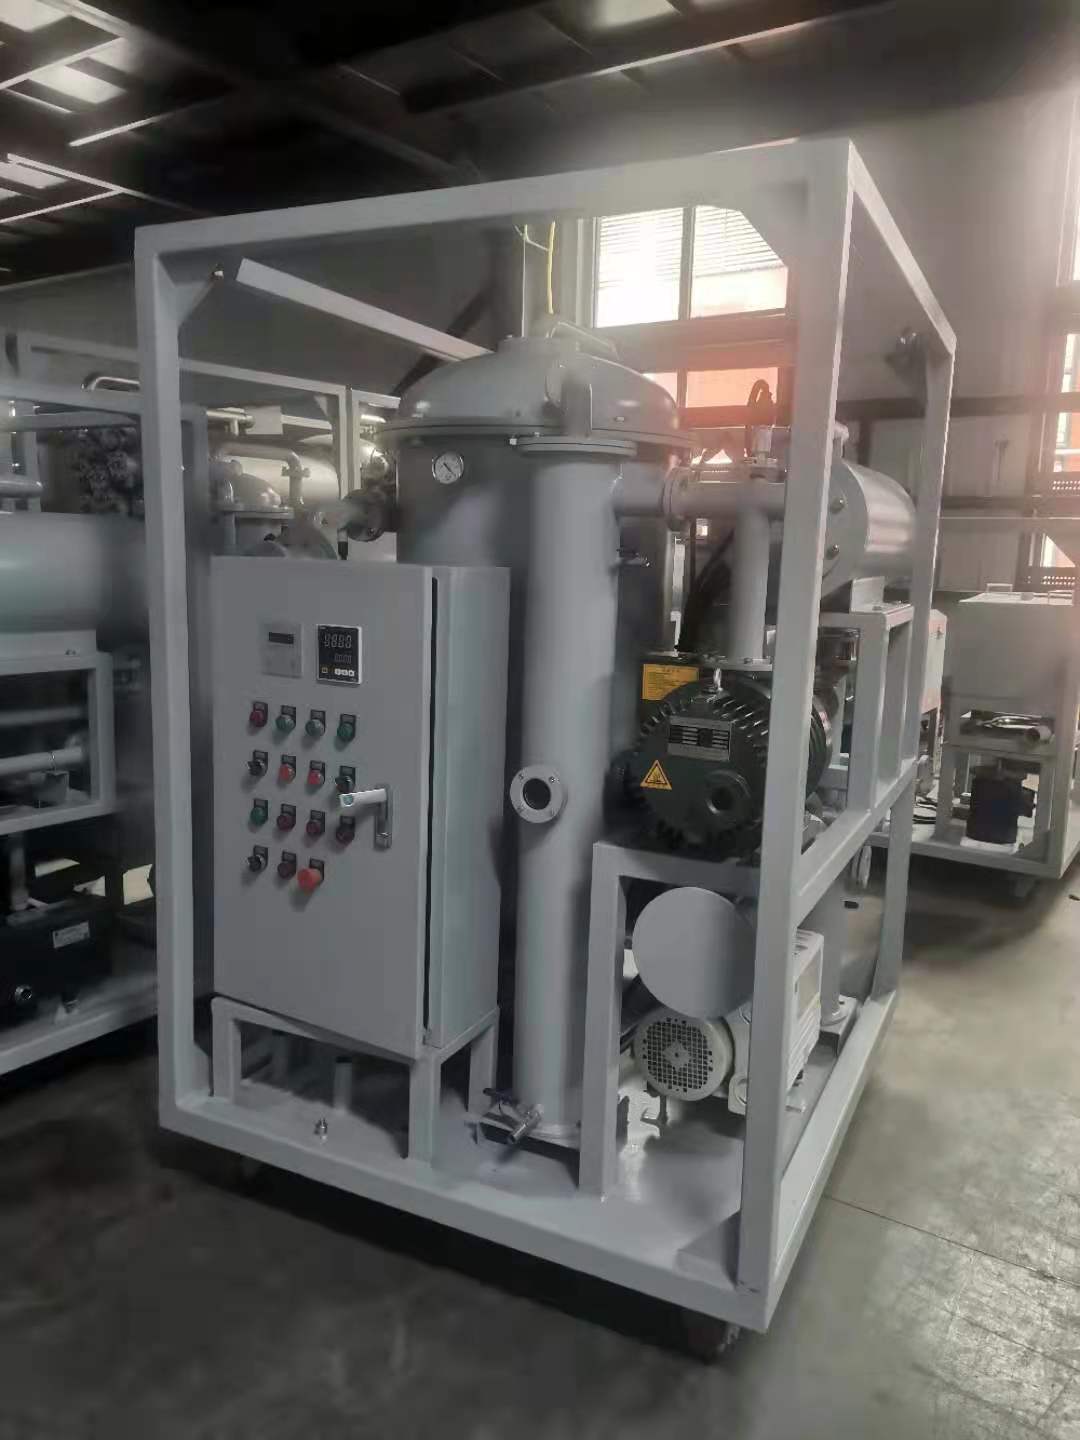 I-ZJB Vula uhlobo lwe-Vacuum Transformer Oil Purifier